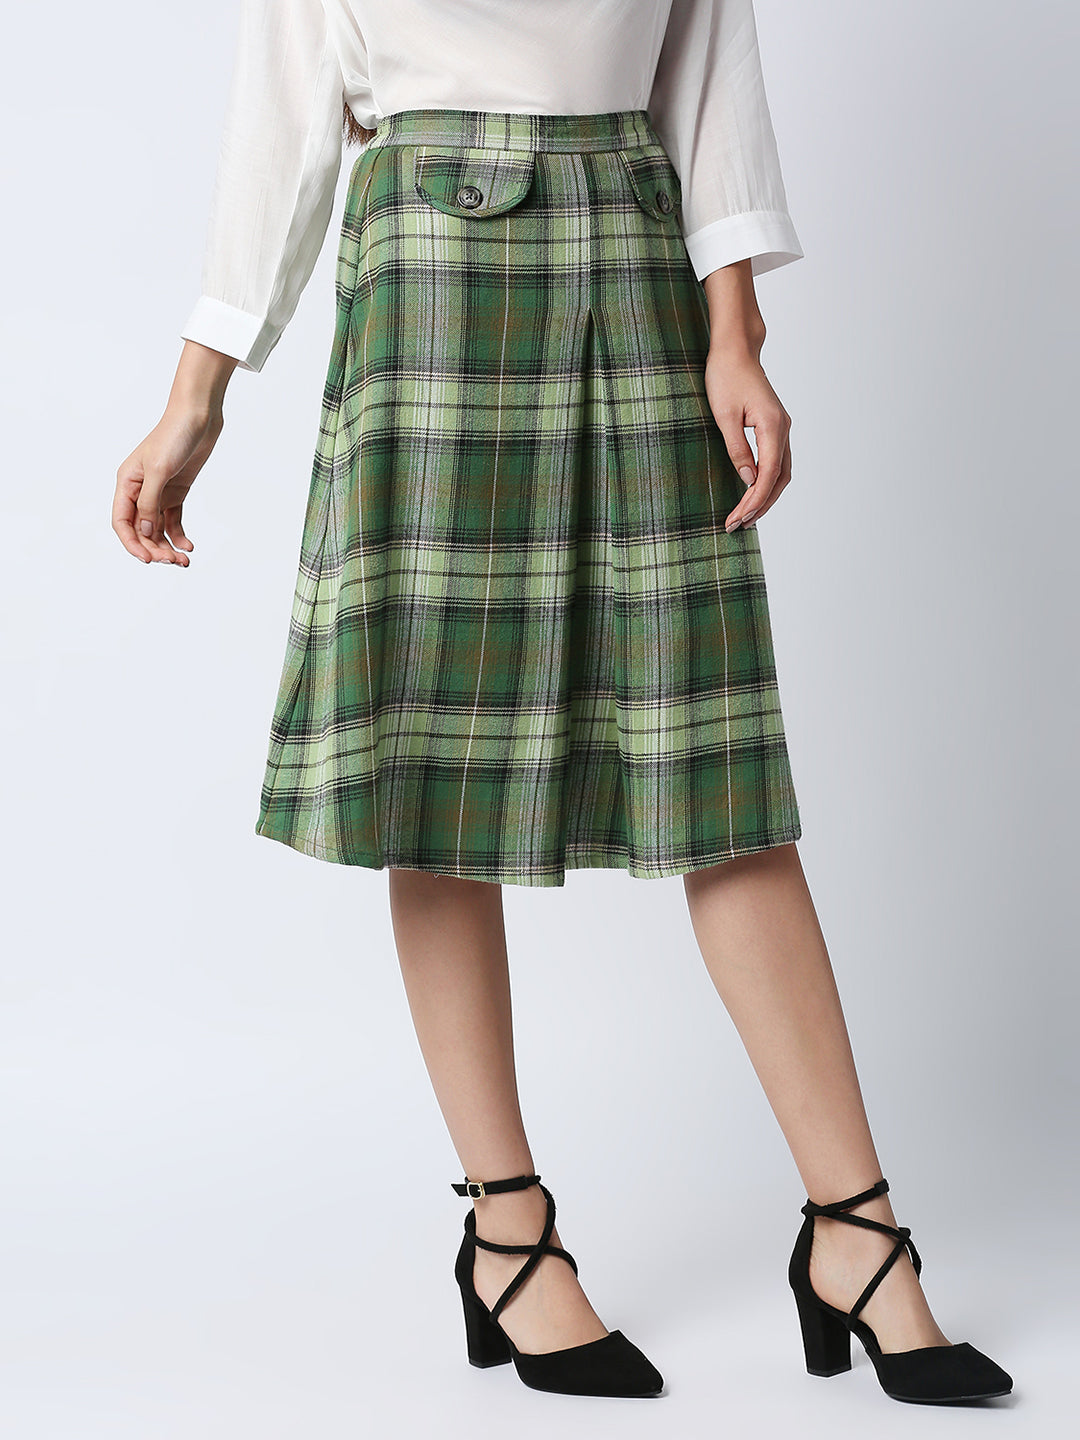 Mantra checkered  A-line skirt